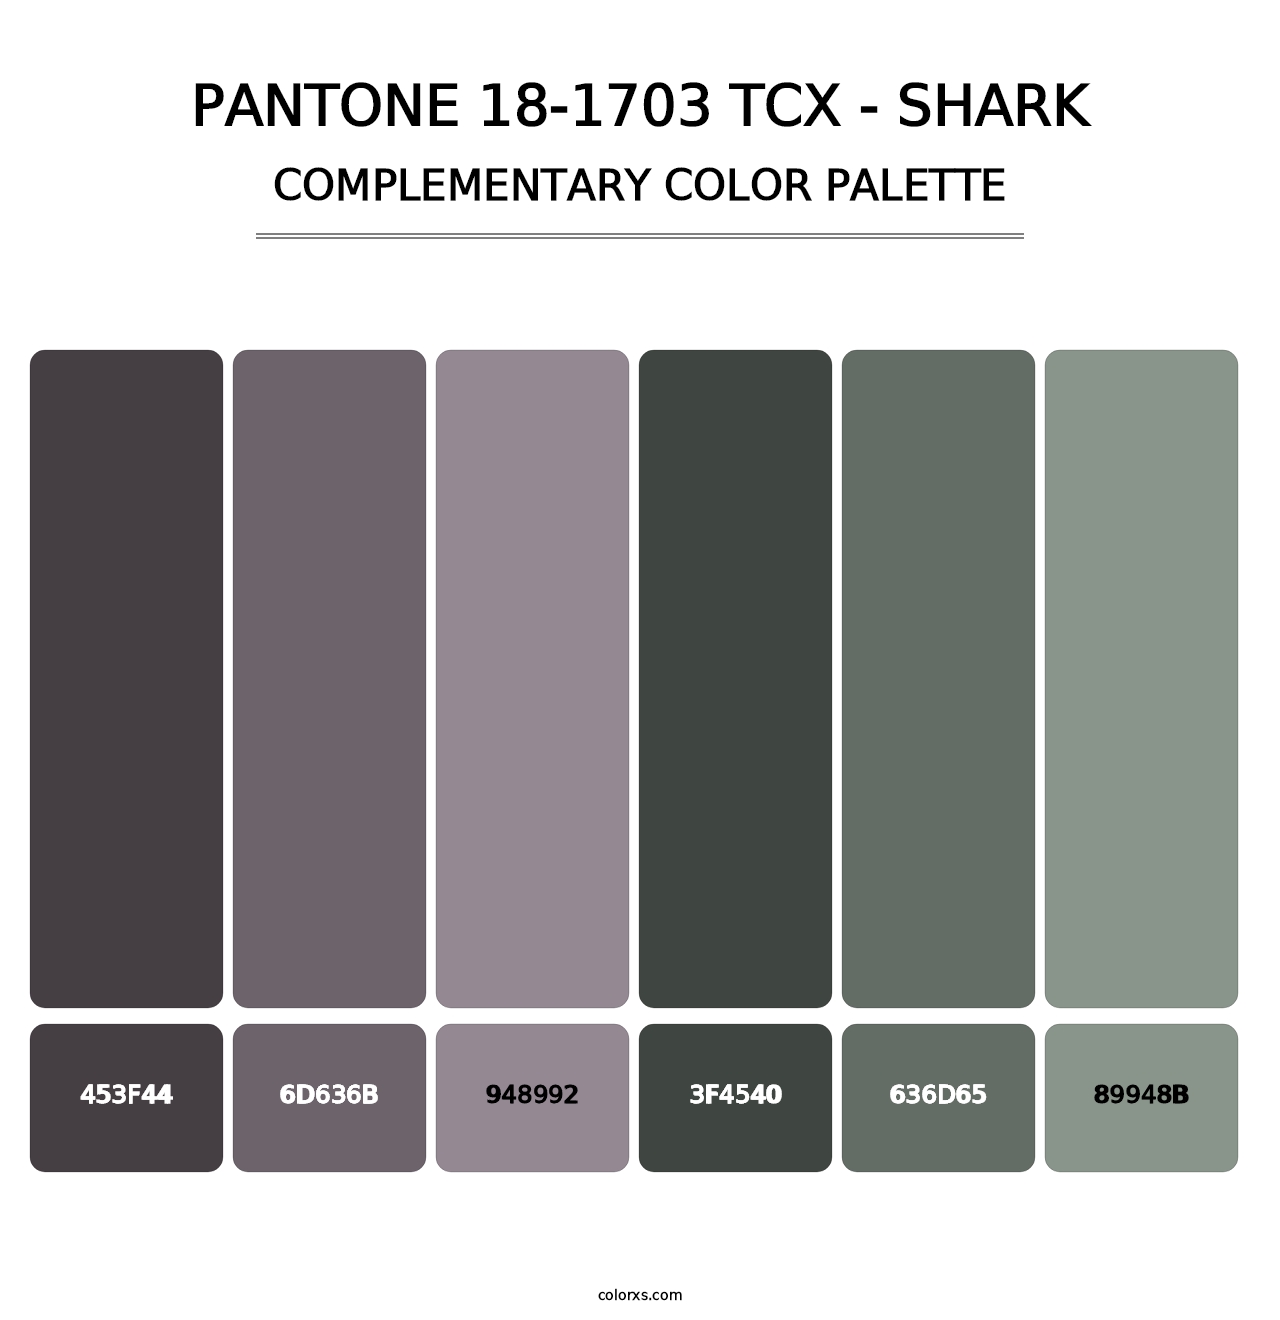 PANTONE 18-1703 TCX - Shark - Complementary Color Palette